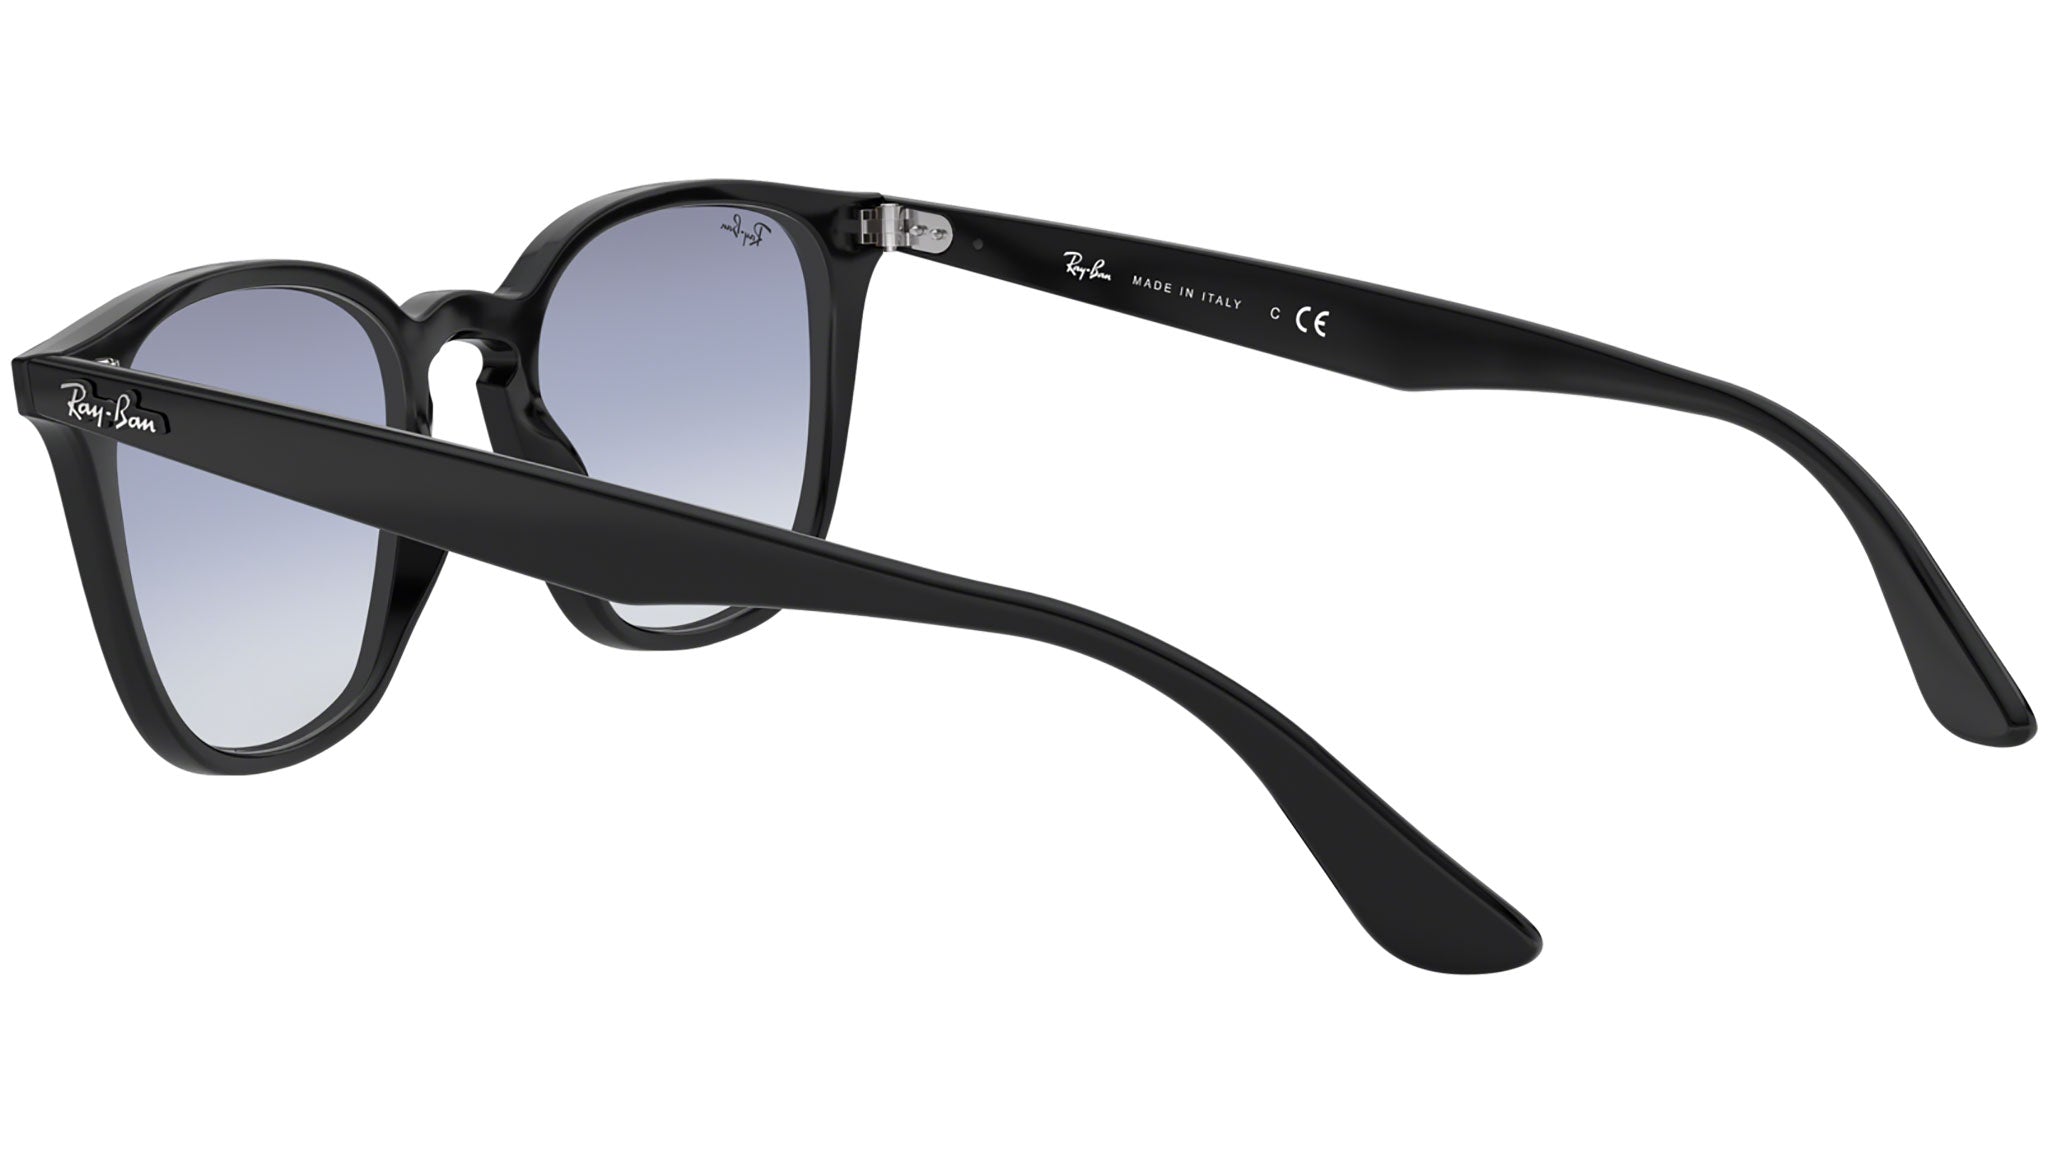 Ray-Ban RB4258F 601/19 Black Sunglasses